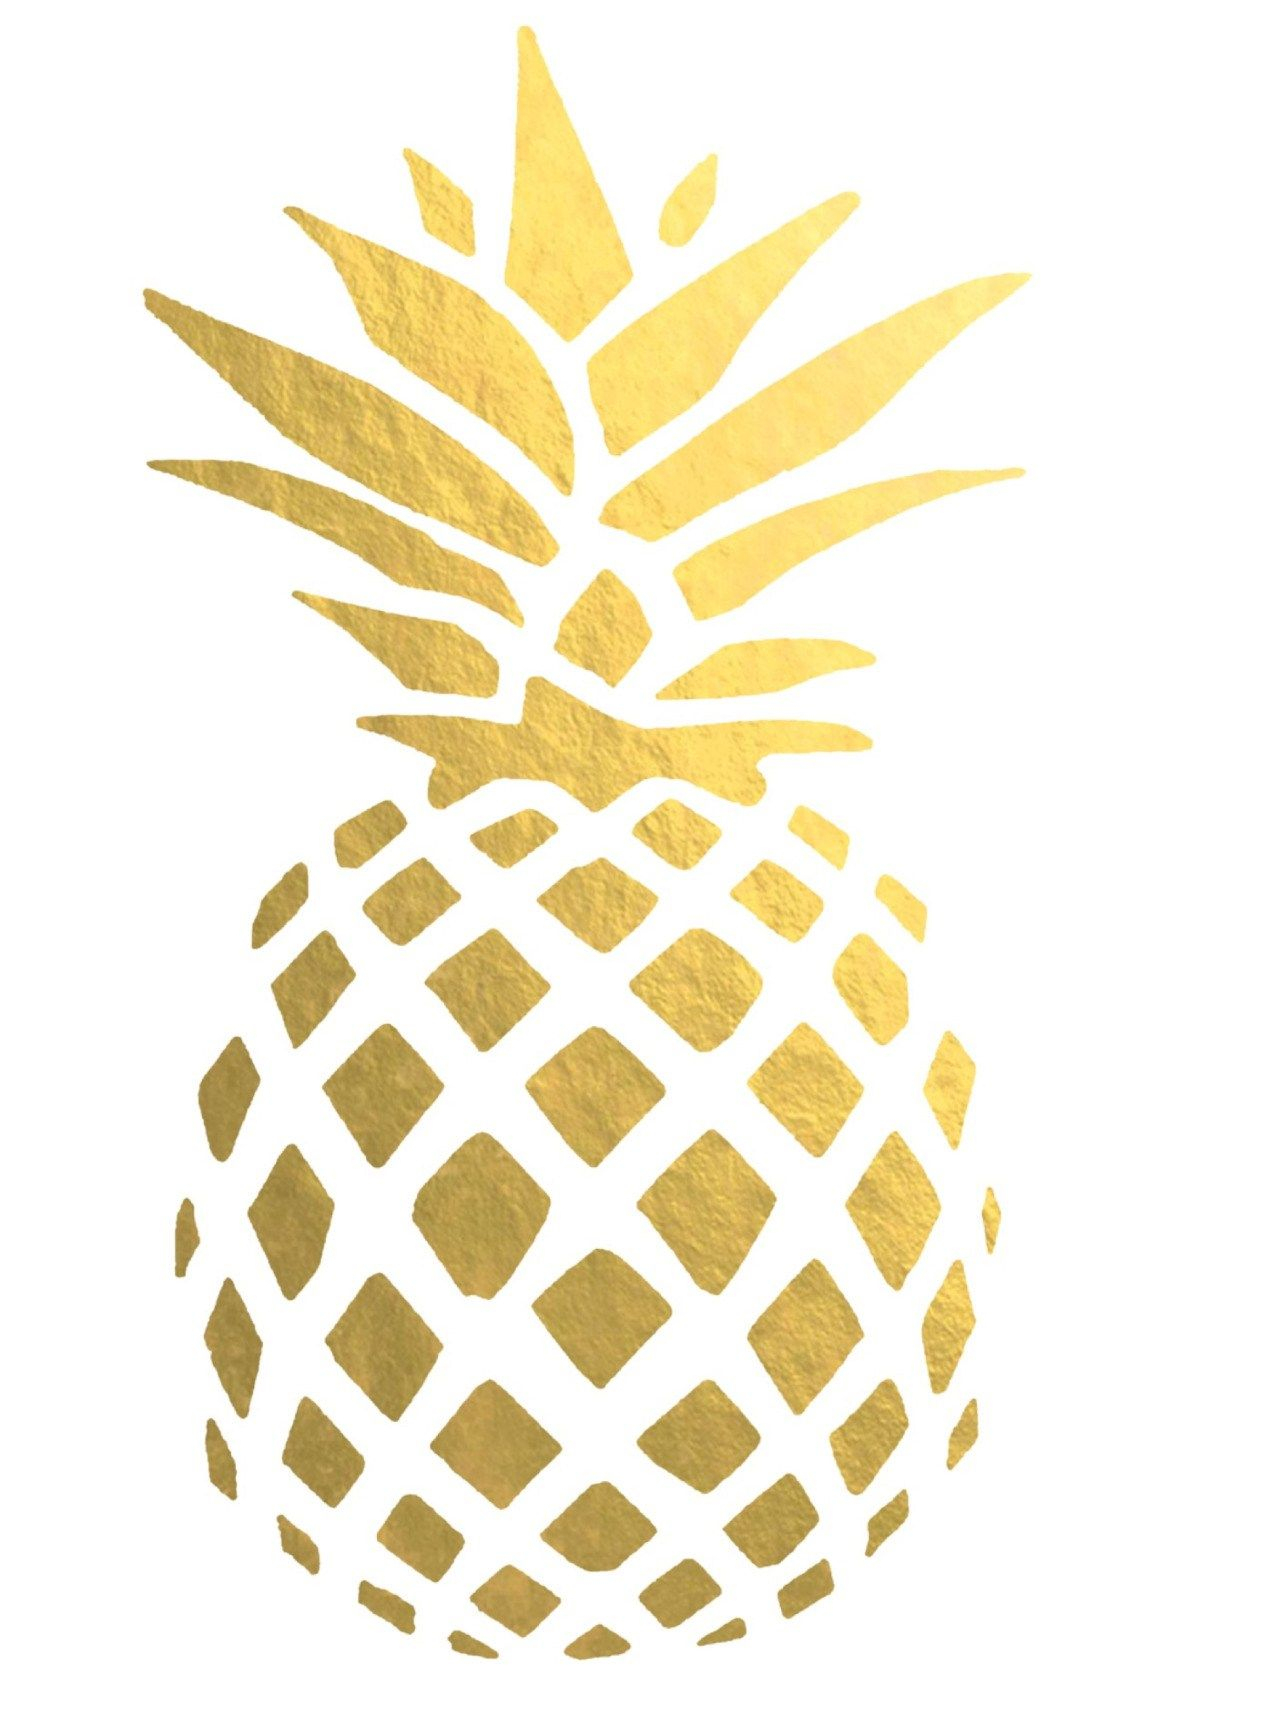 The Pretty Pineapple | Pineapple Art, Pineapple Wallpaper